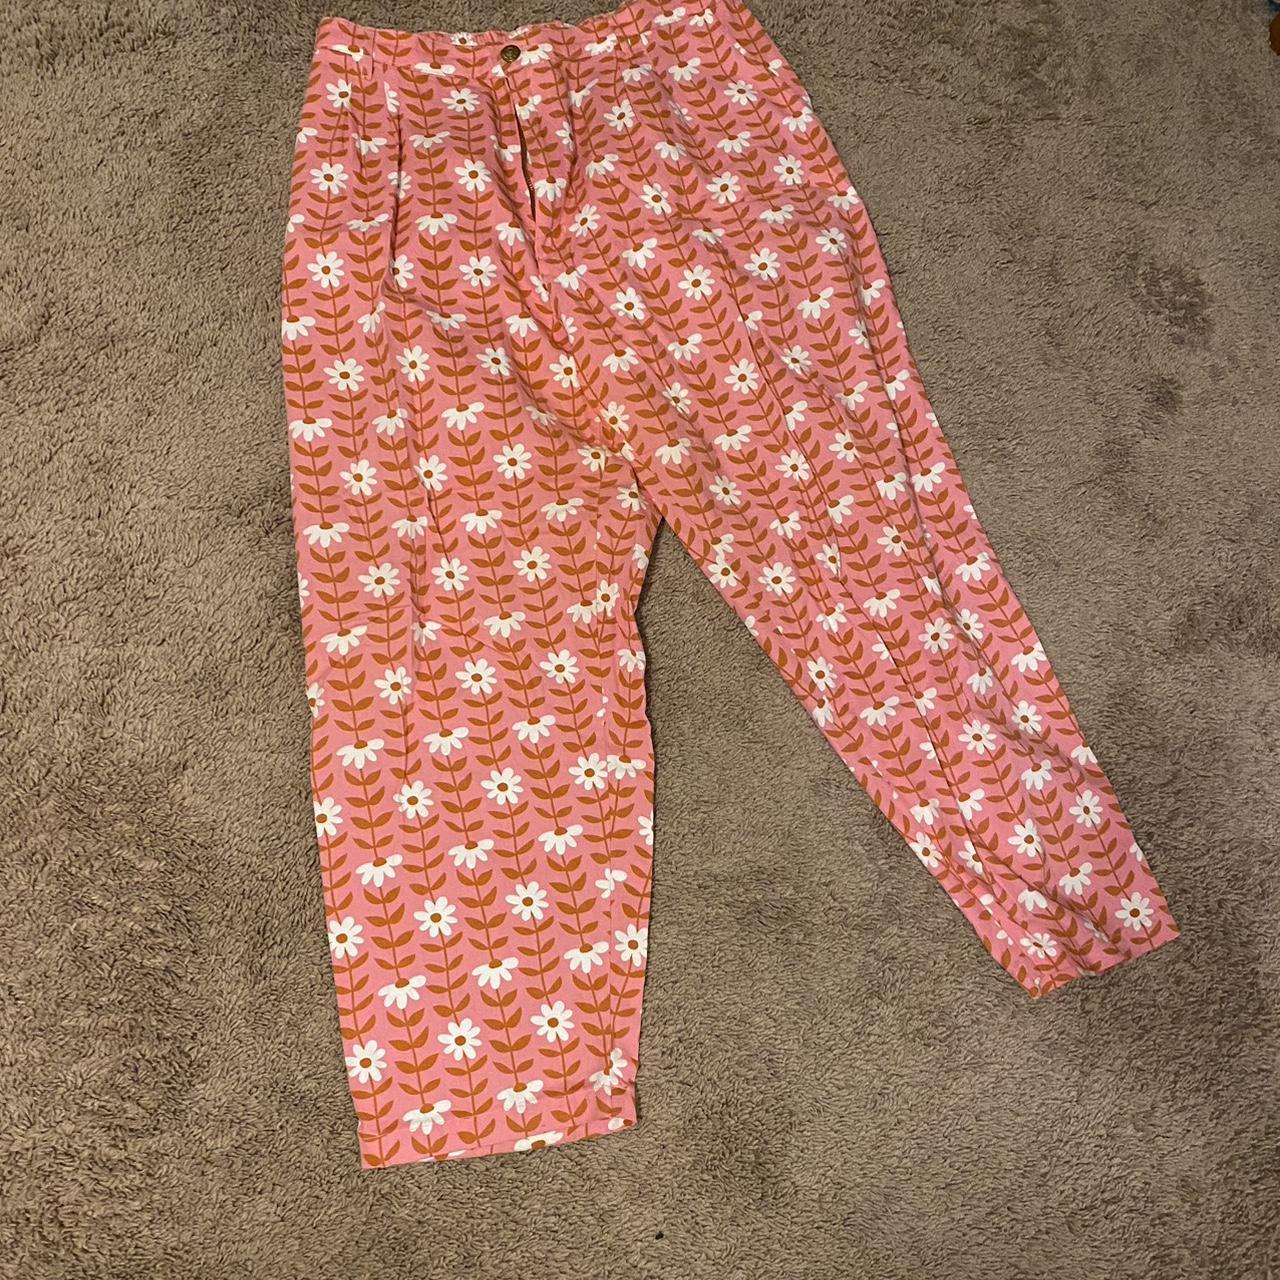 Big Bud press trouser pants size XL in pink daisy... - Depop